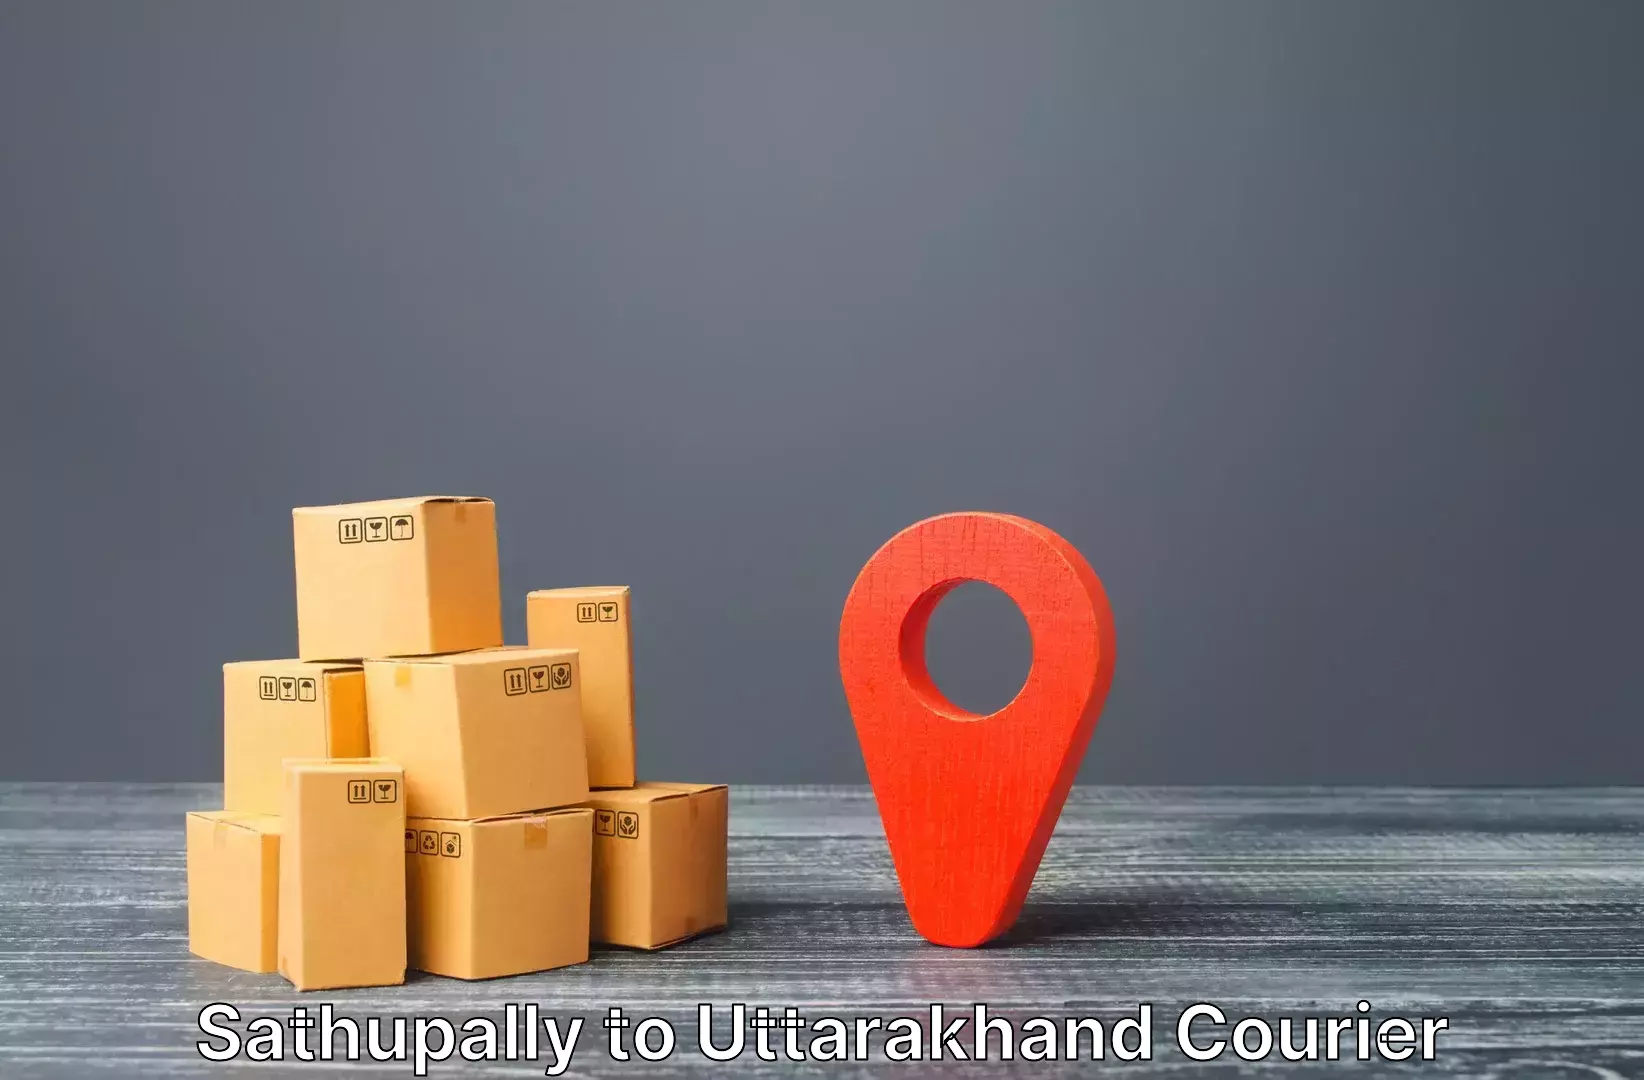 Suburban luggage delivery in Sathupally to Uttarakhand